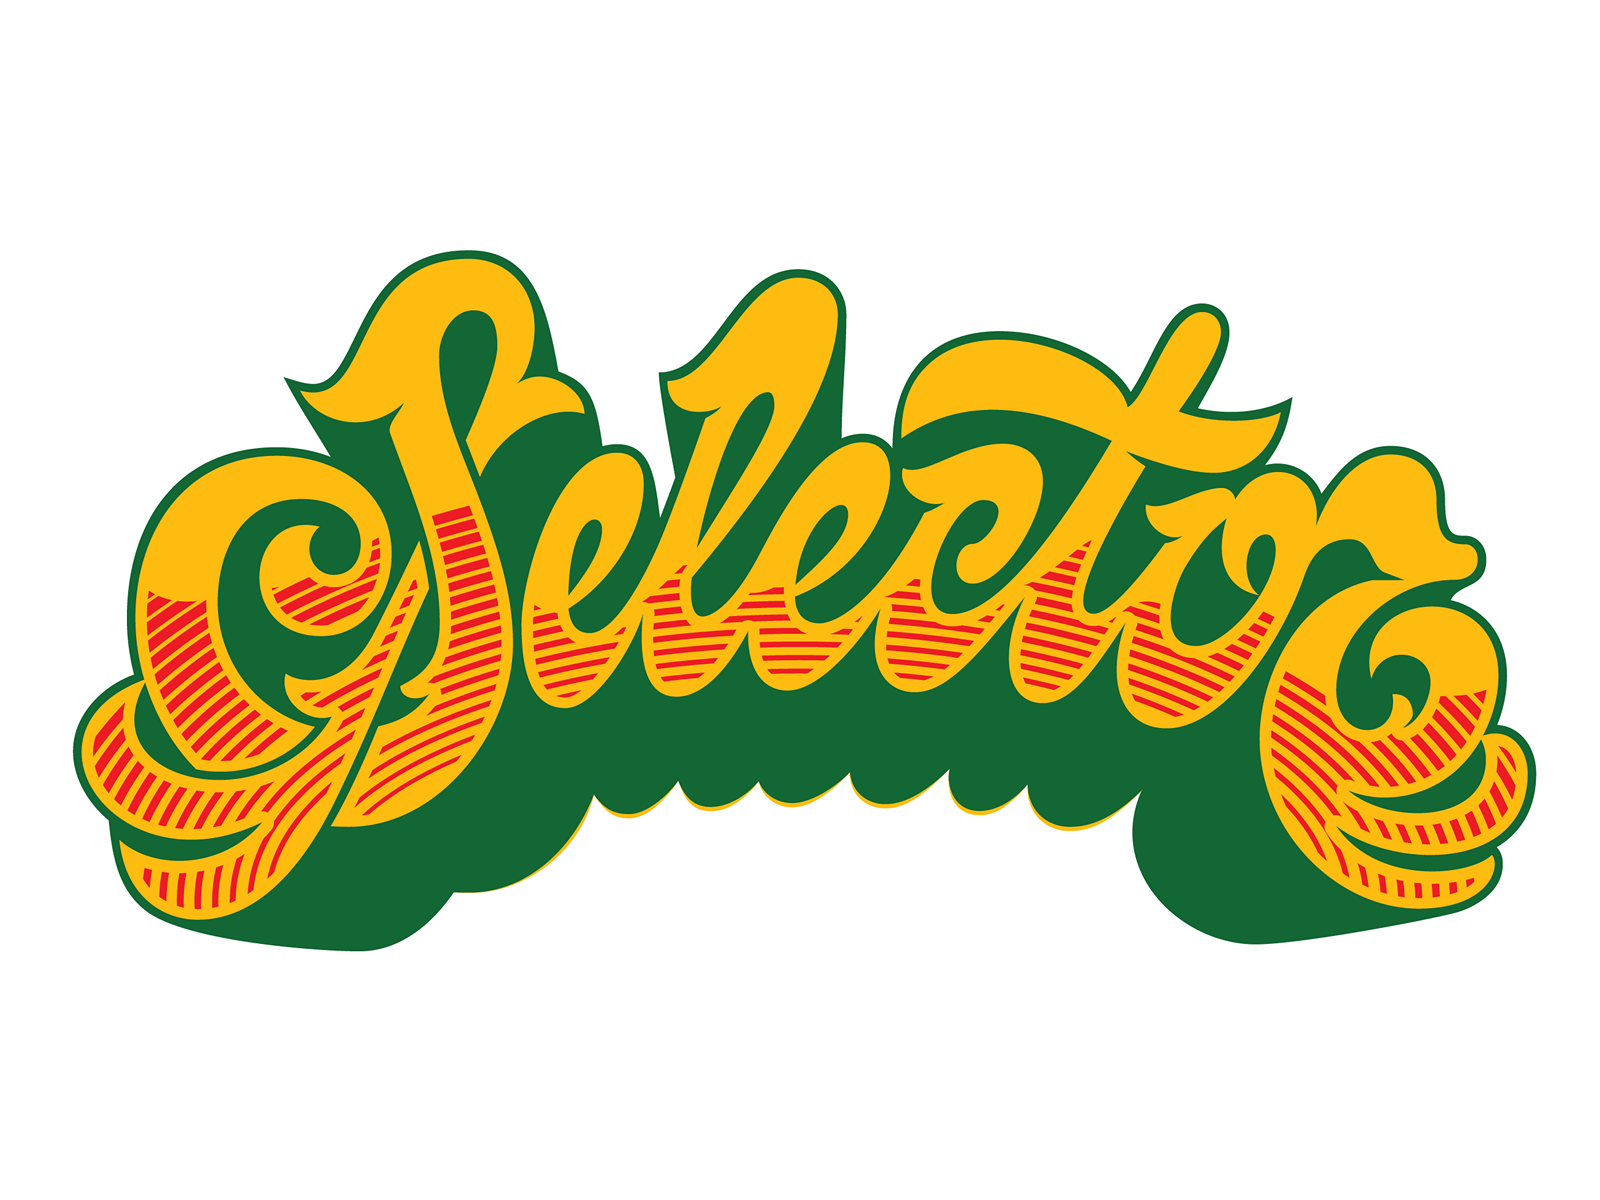 Selector 2021 Logo by 86era on Dribbble